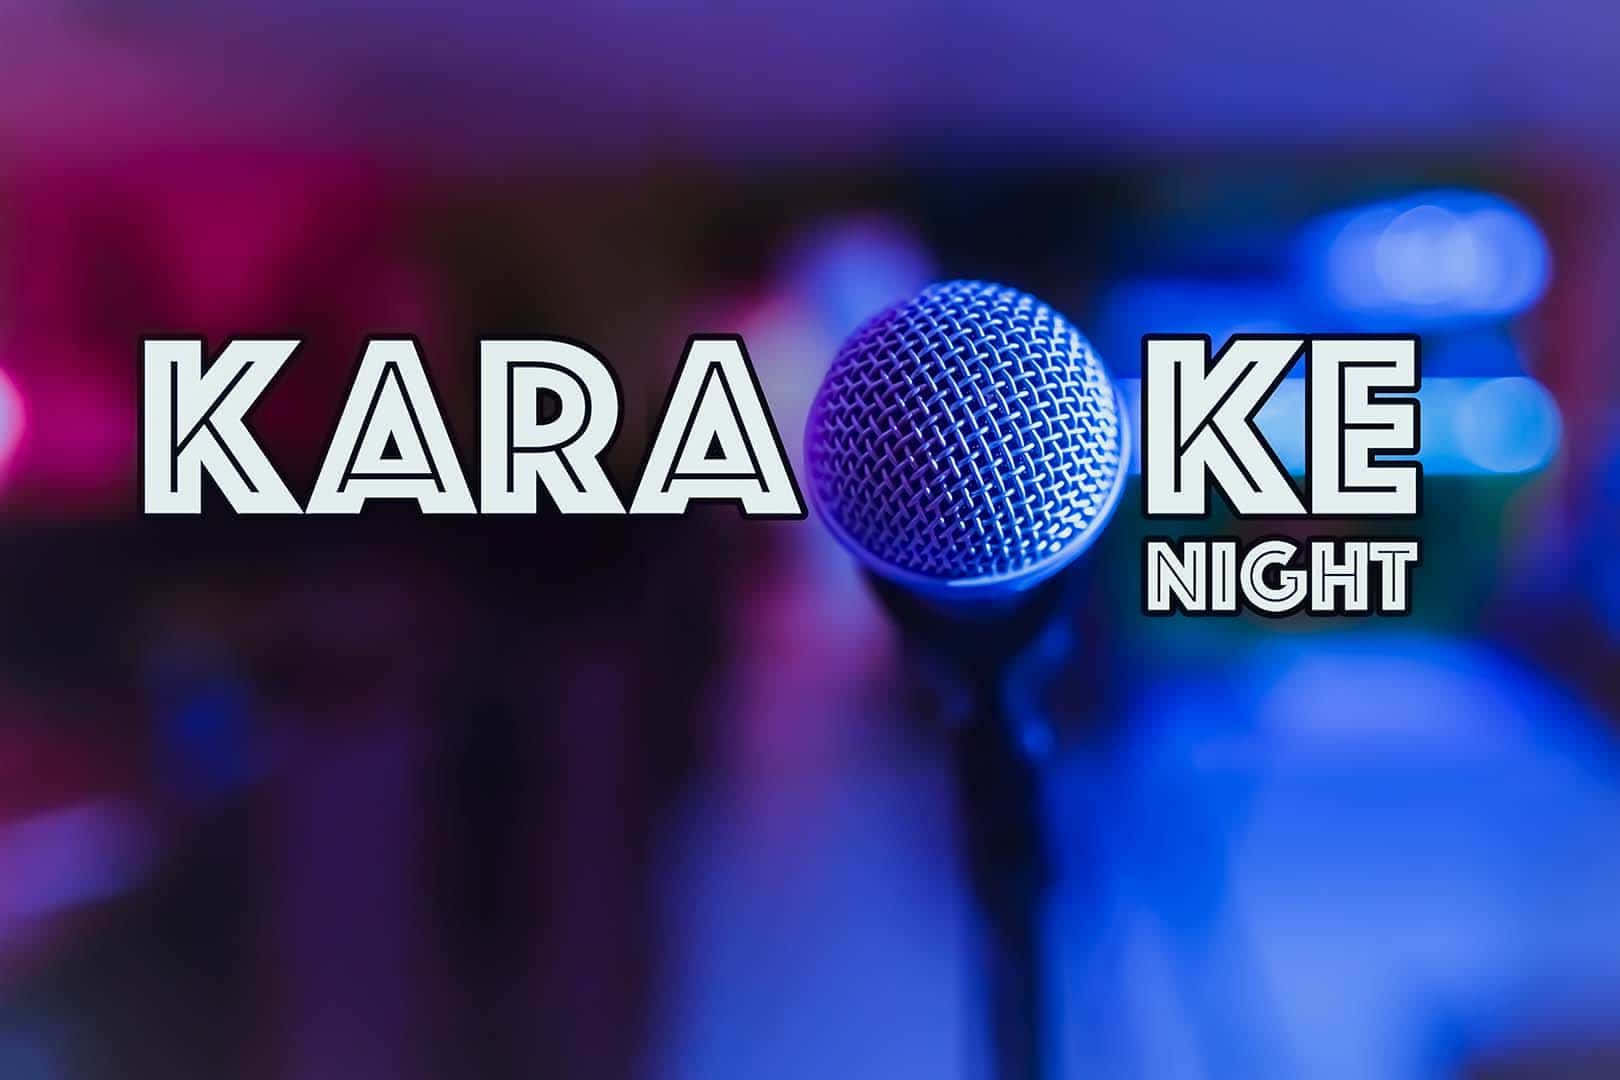 Karaoke Night Typography Background